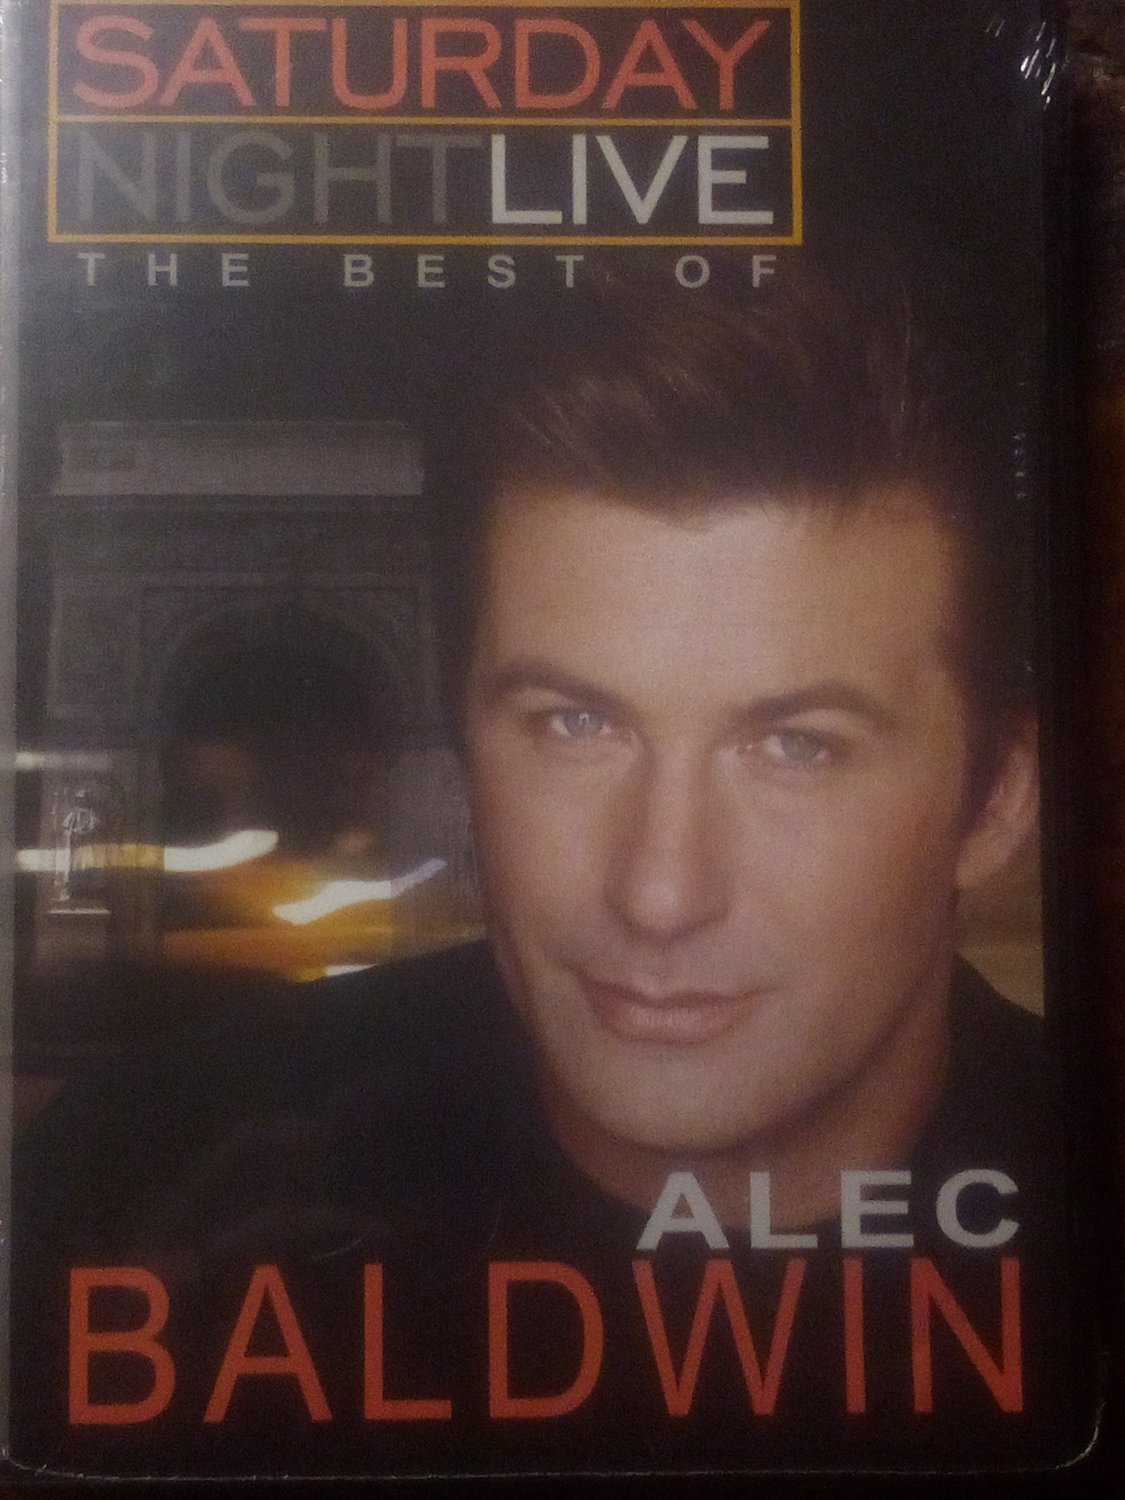 Saturday Night Live : best of Alec Baldwin